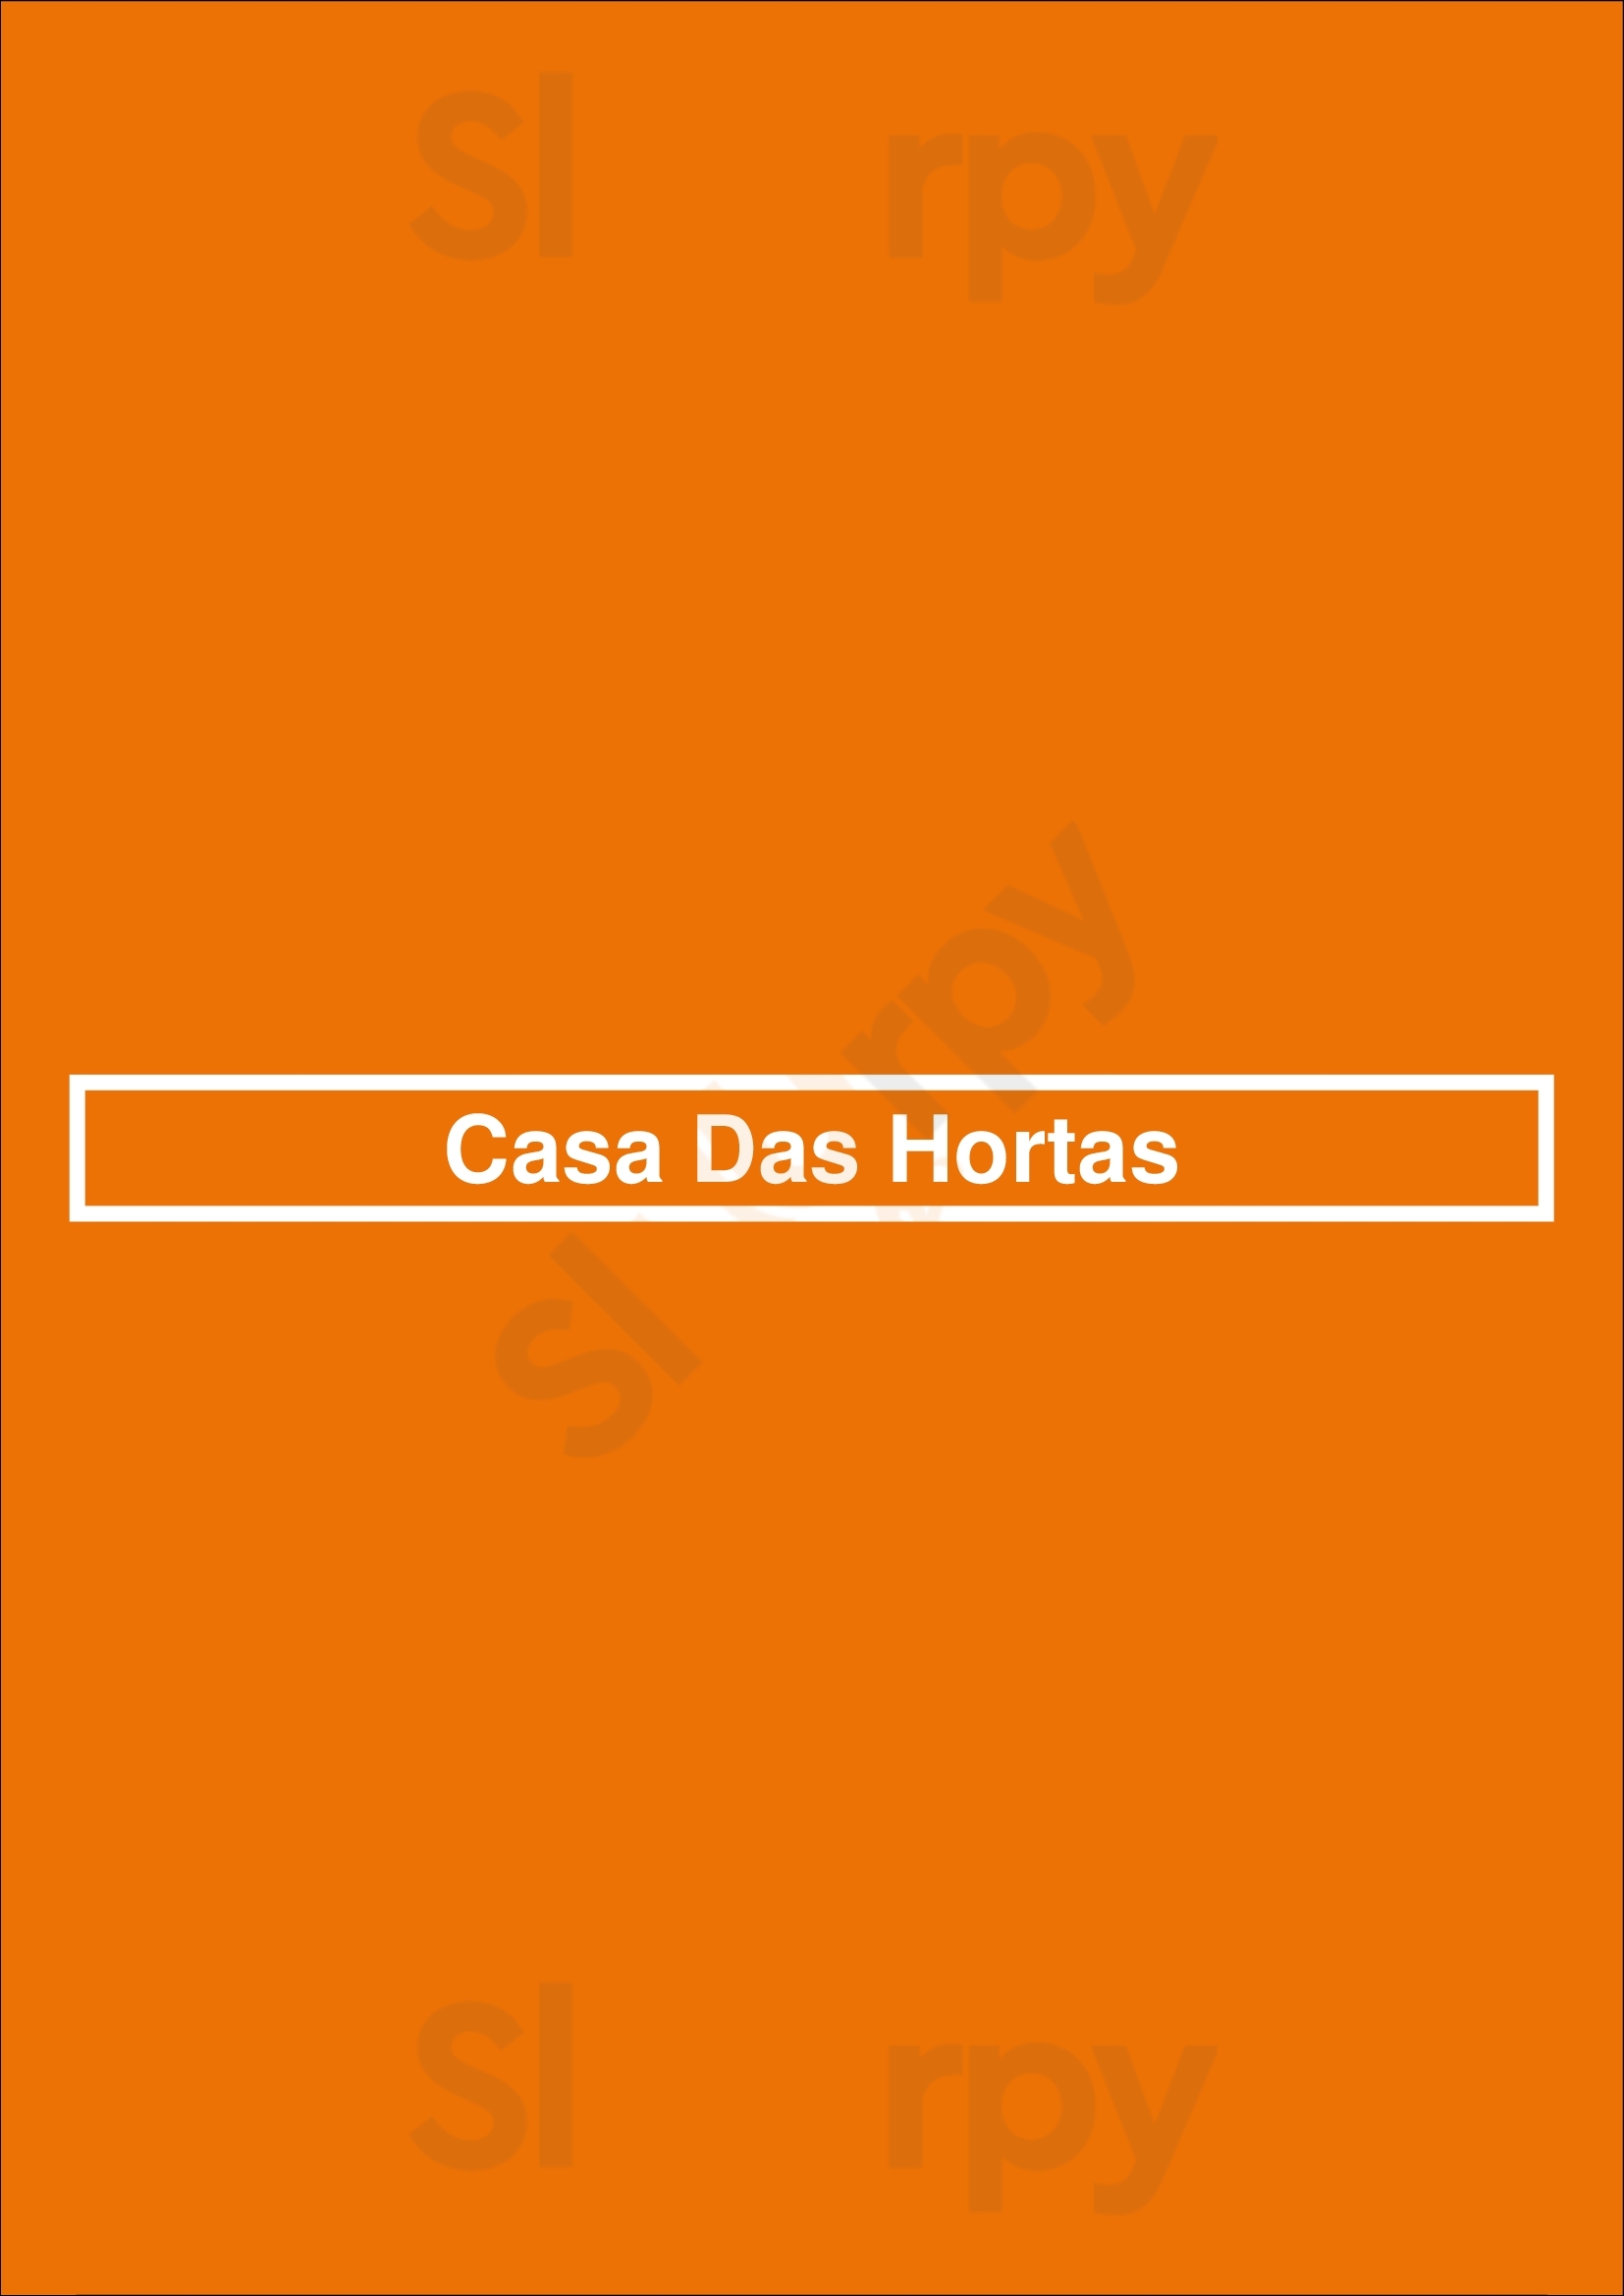 Casa Das Hortas Braga Menu - 1